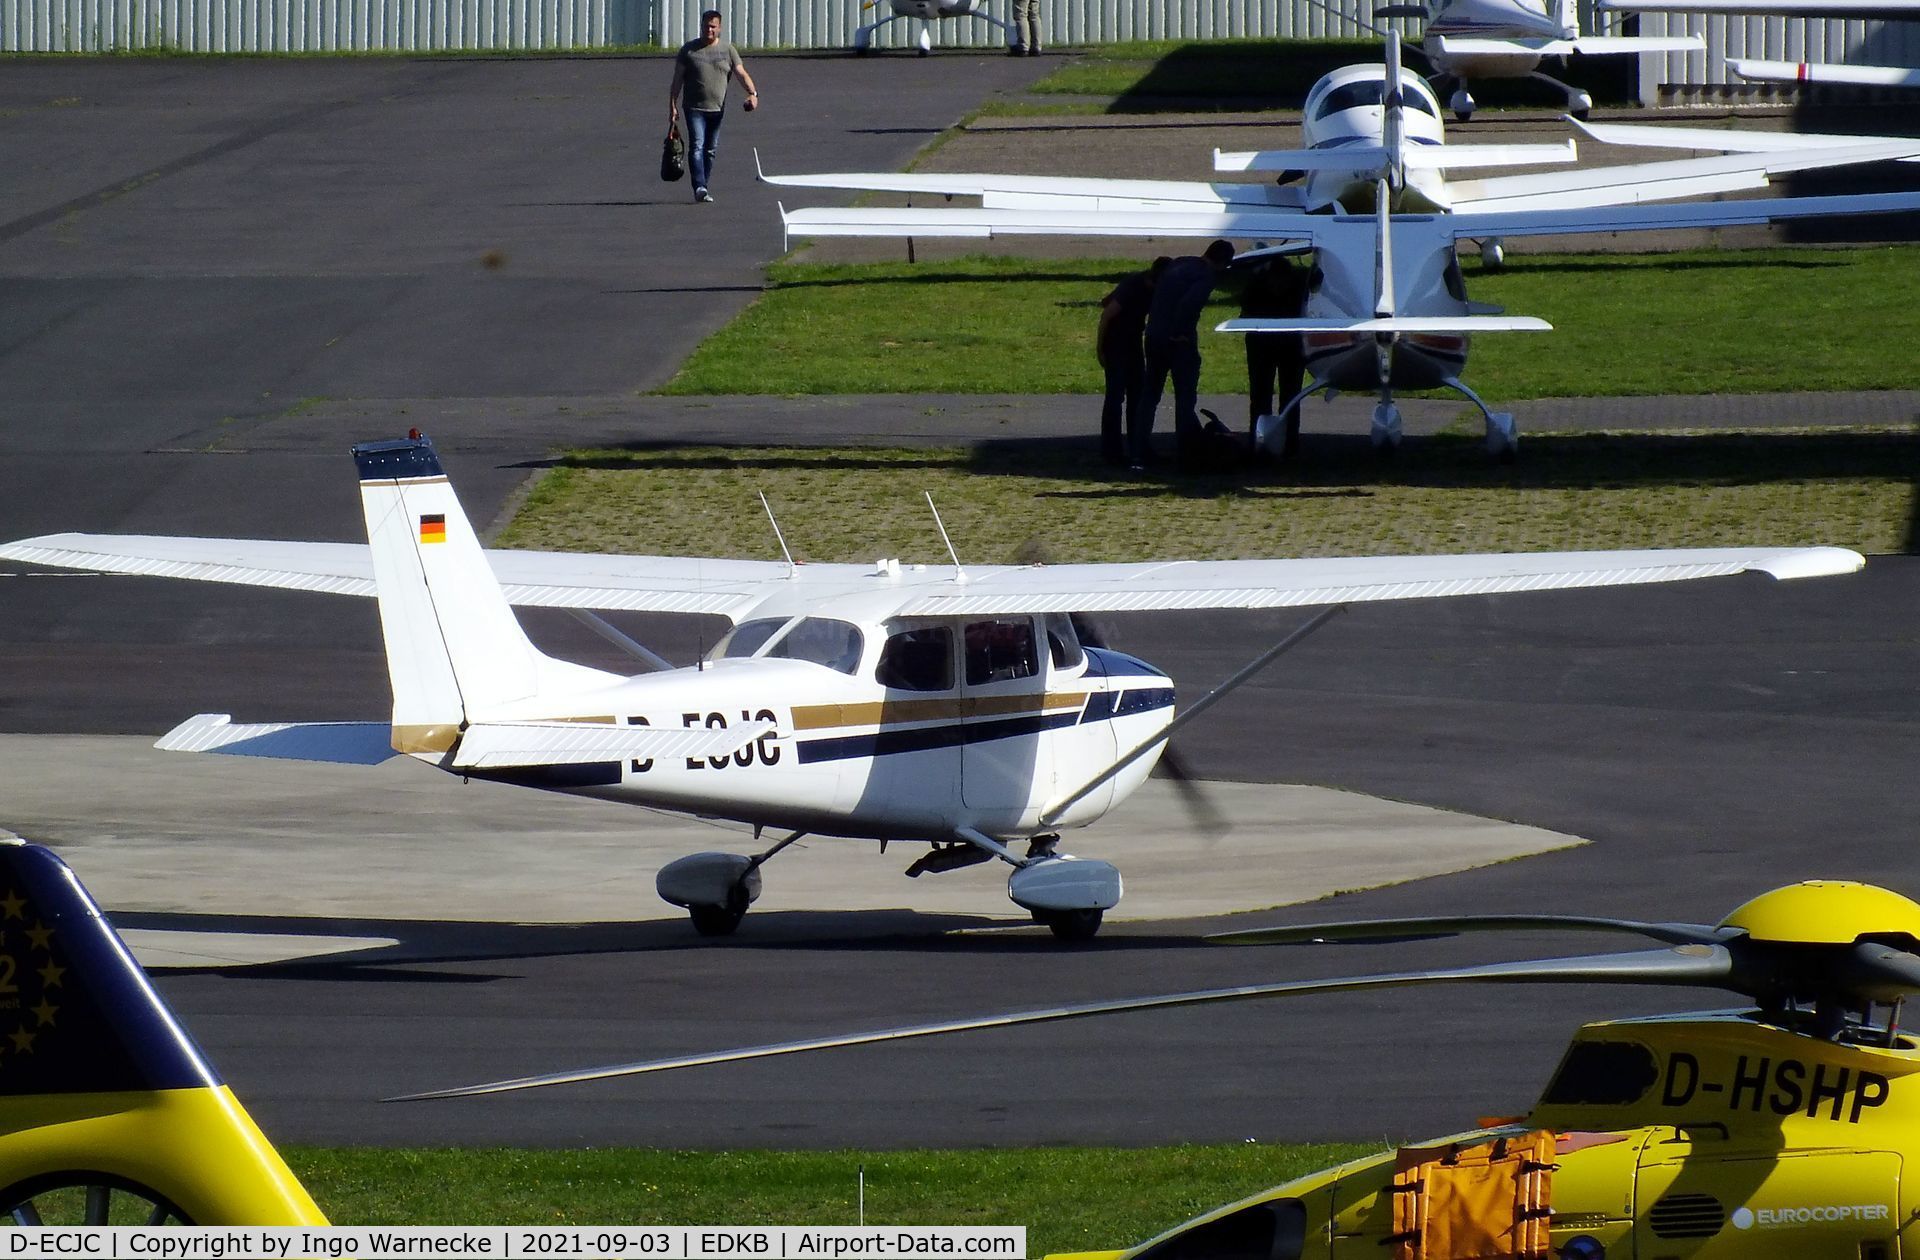 D-ECJC, 1970 Reims F172H Skyhawk C/N 0734, Cessna (Reims) F172H at Bonn-Hangelar airfield during the Grumman Fly-in 2021